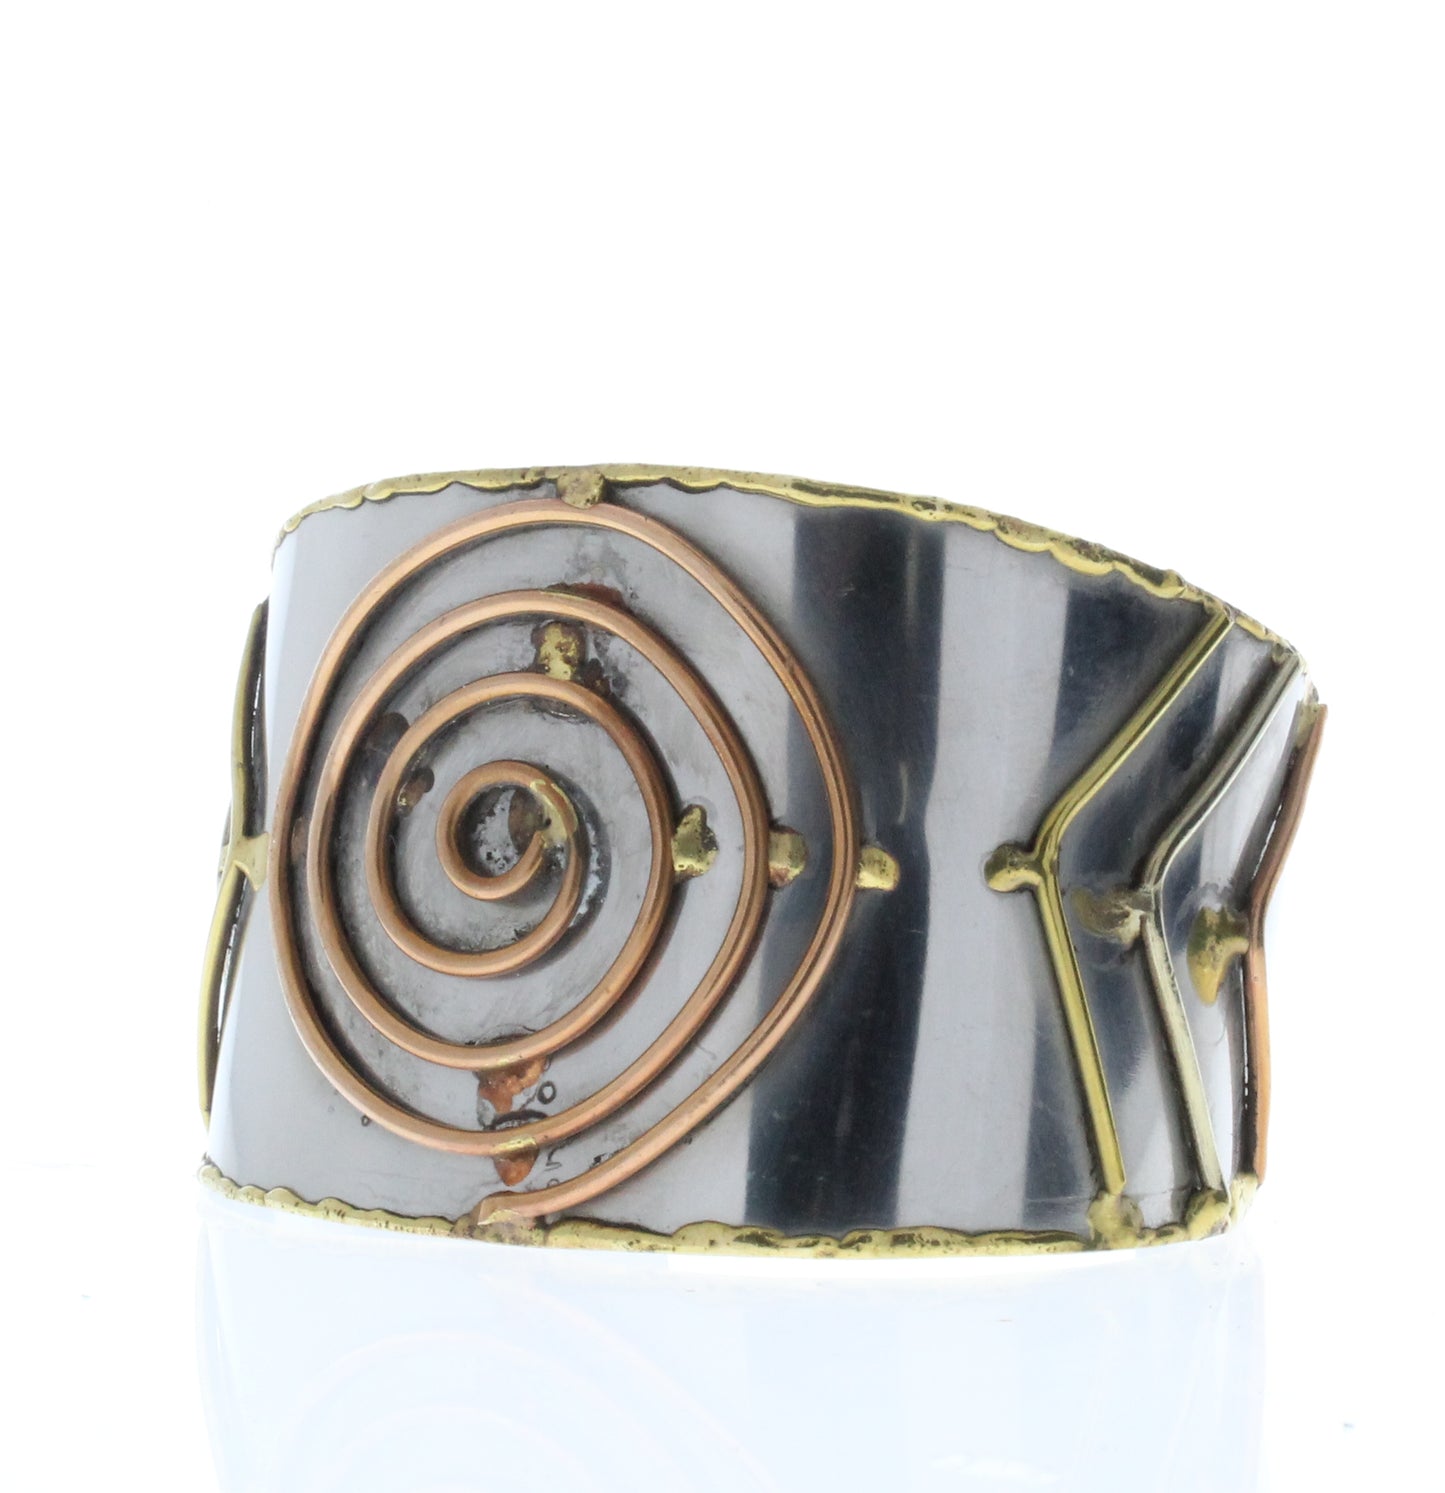 Spiral Bracelet Cuff, Antique Silver w/Brass/Copper Inlay, ea